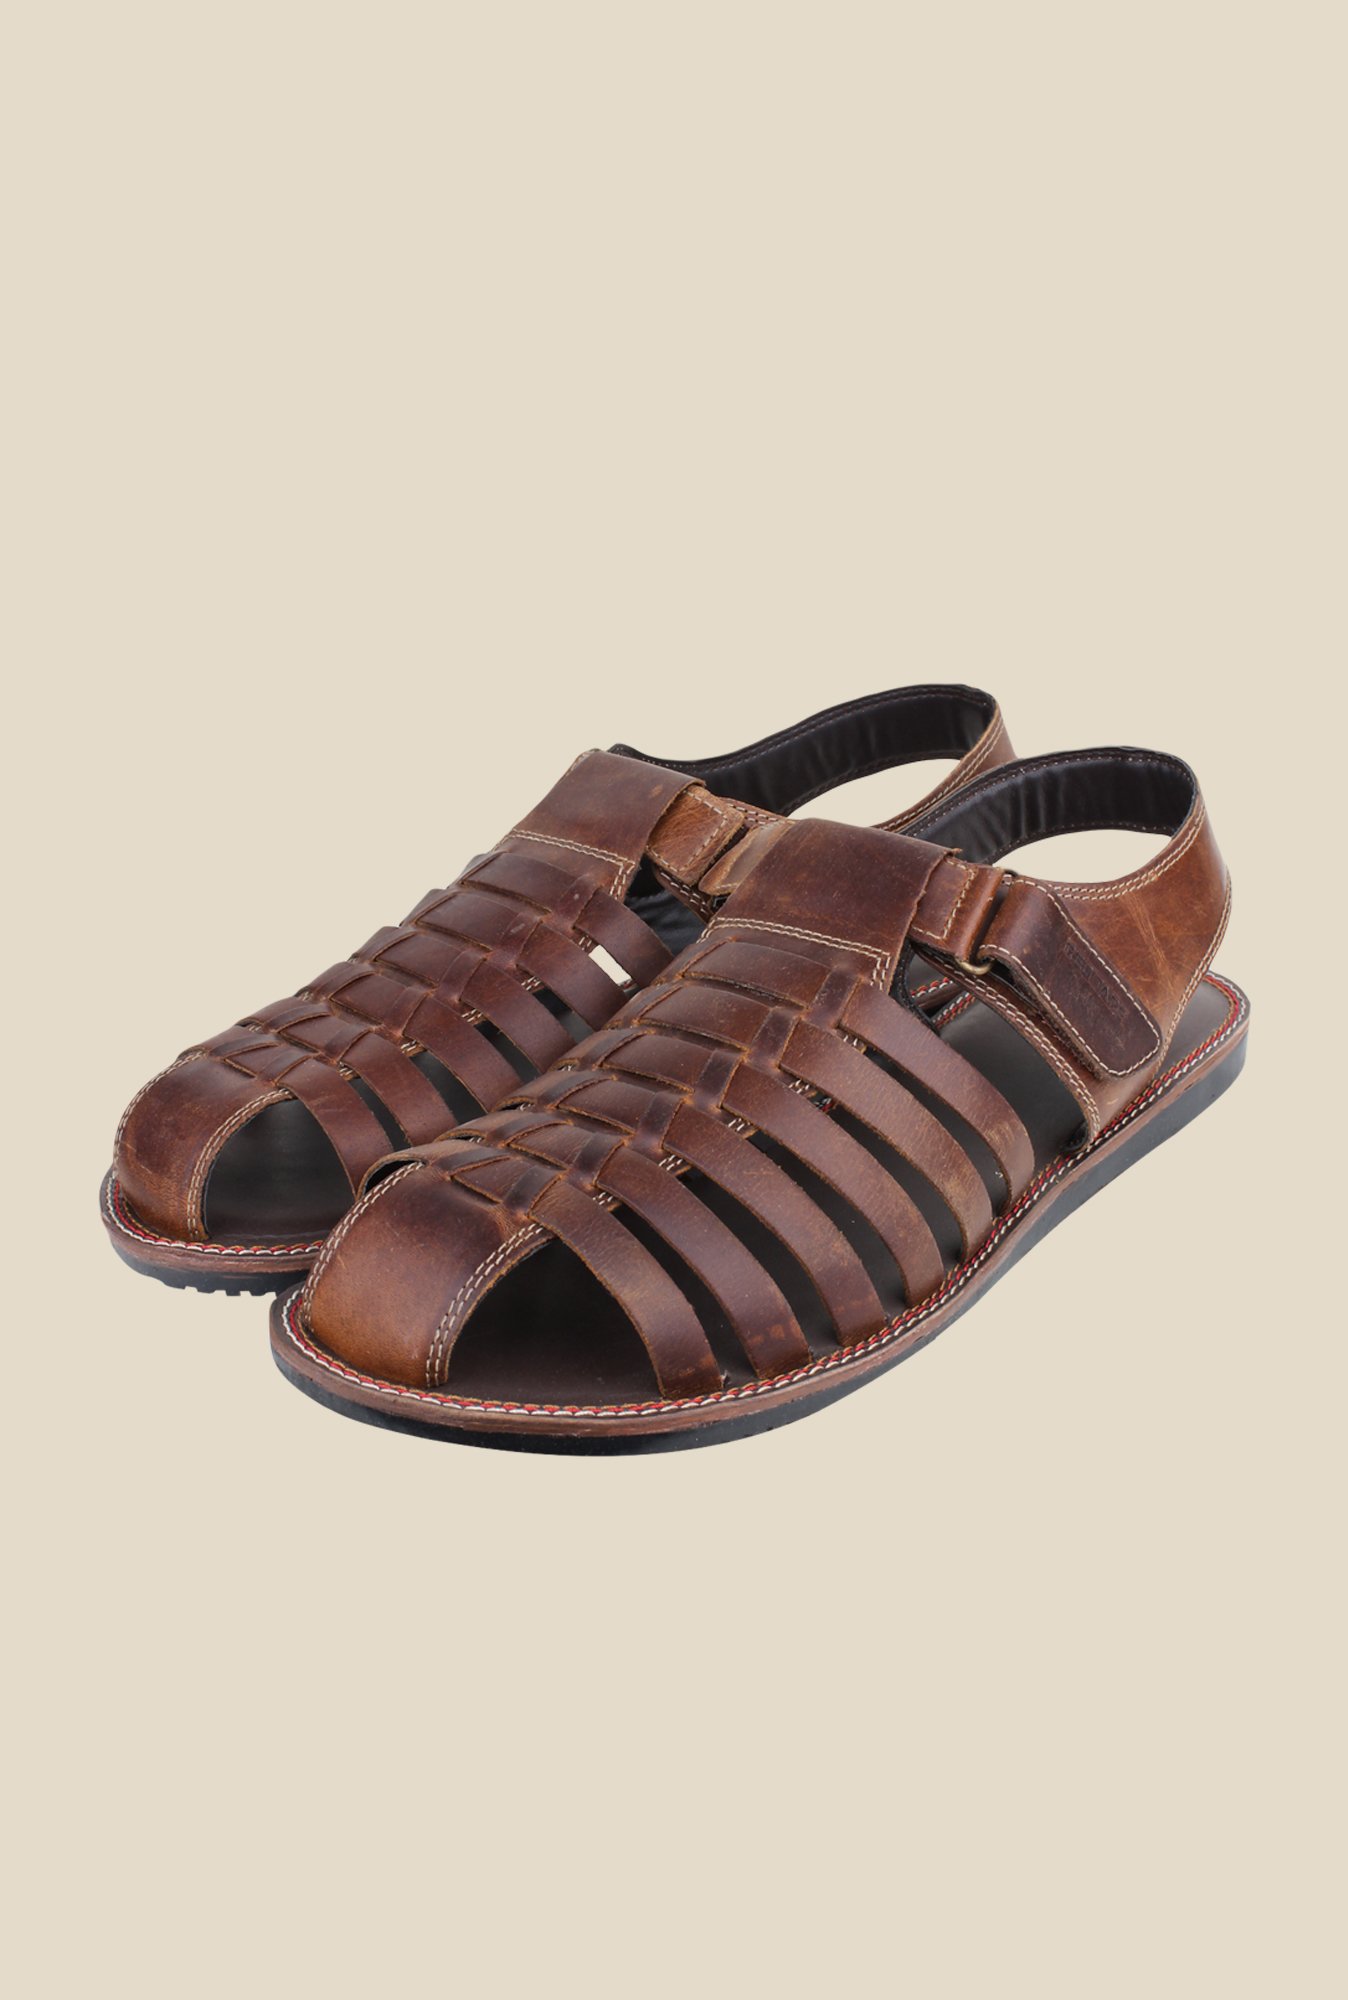 Mens Huarache Sandal  Handcrafted  Ethically Made  Huaraches Staple  shoes Huarache sandals